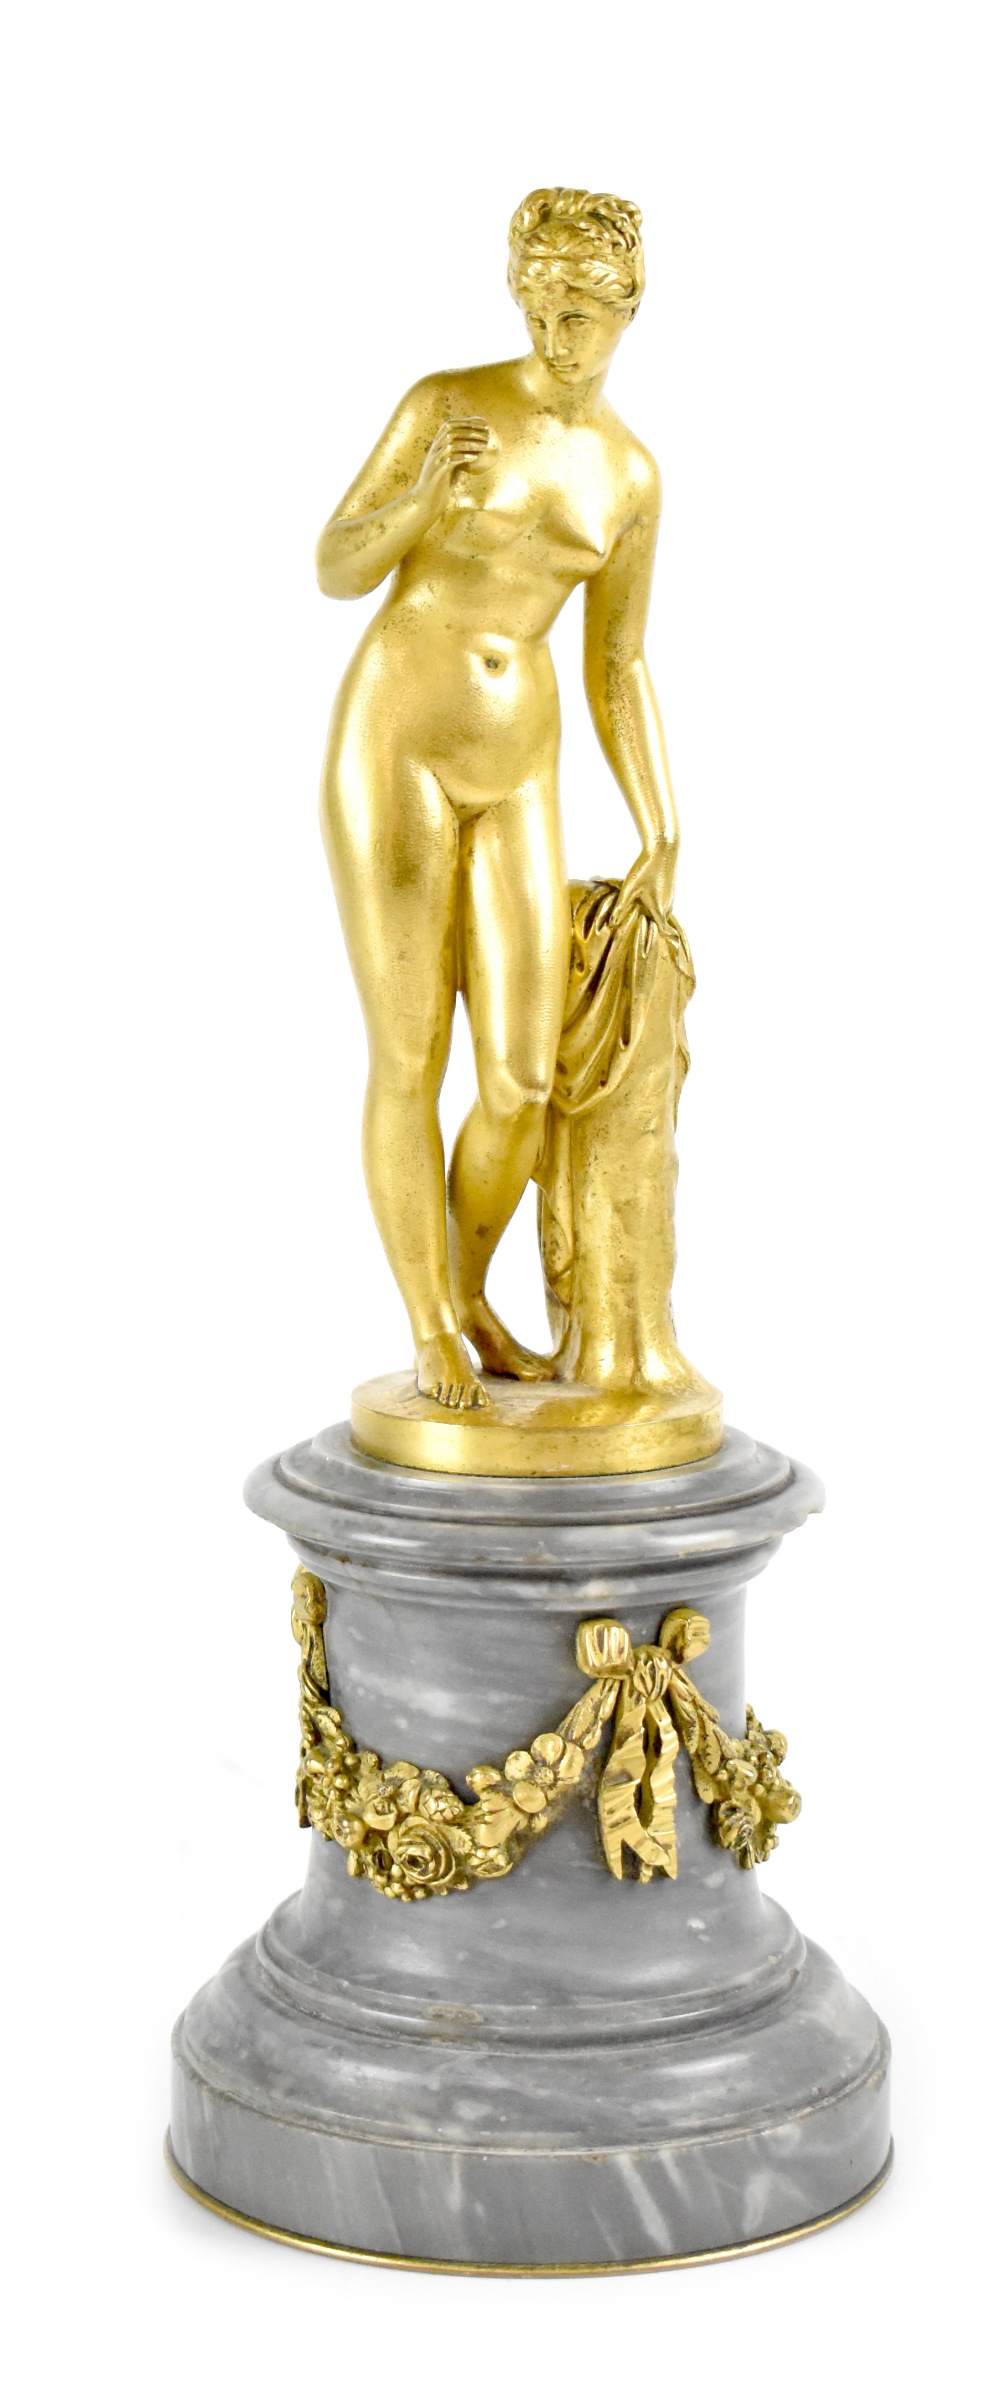 AFTER THORWALDSEN; a Belle Èpoque era gilded bronze of Eve holding a forbidden fruit,